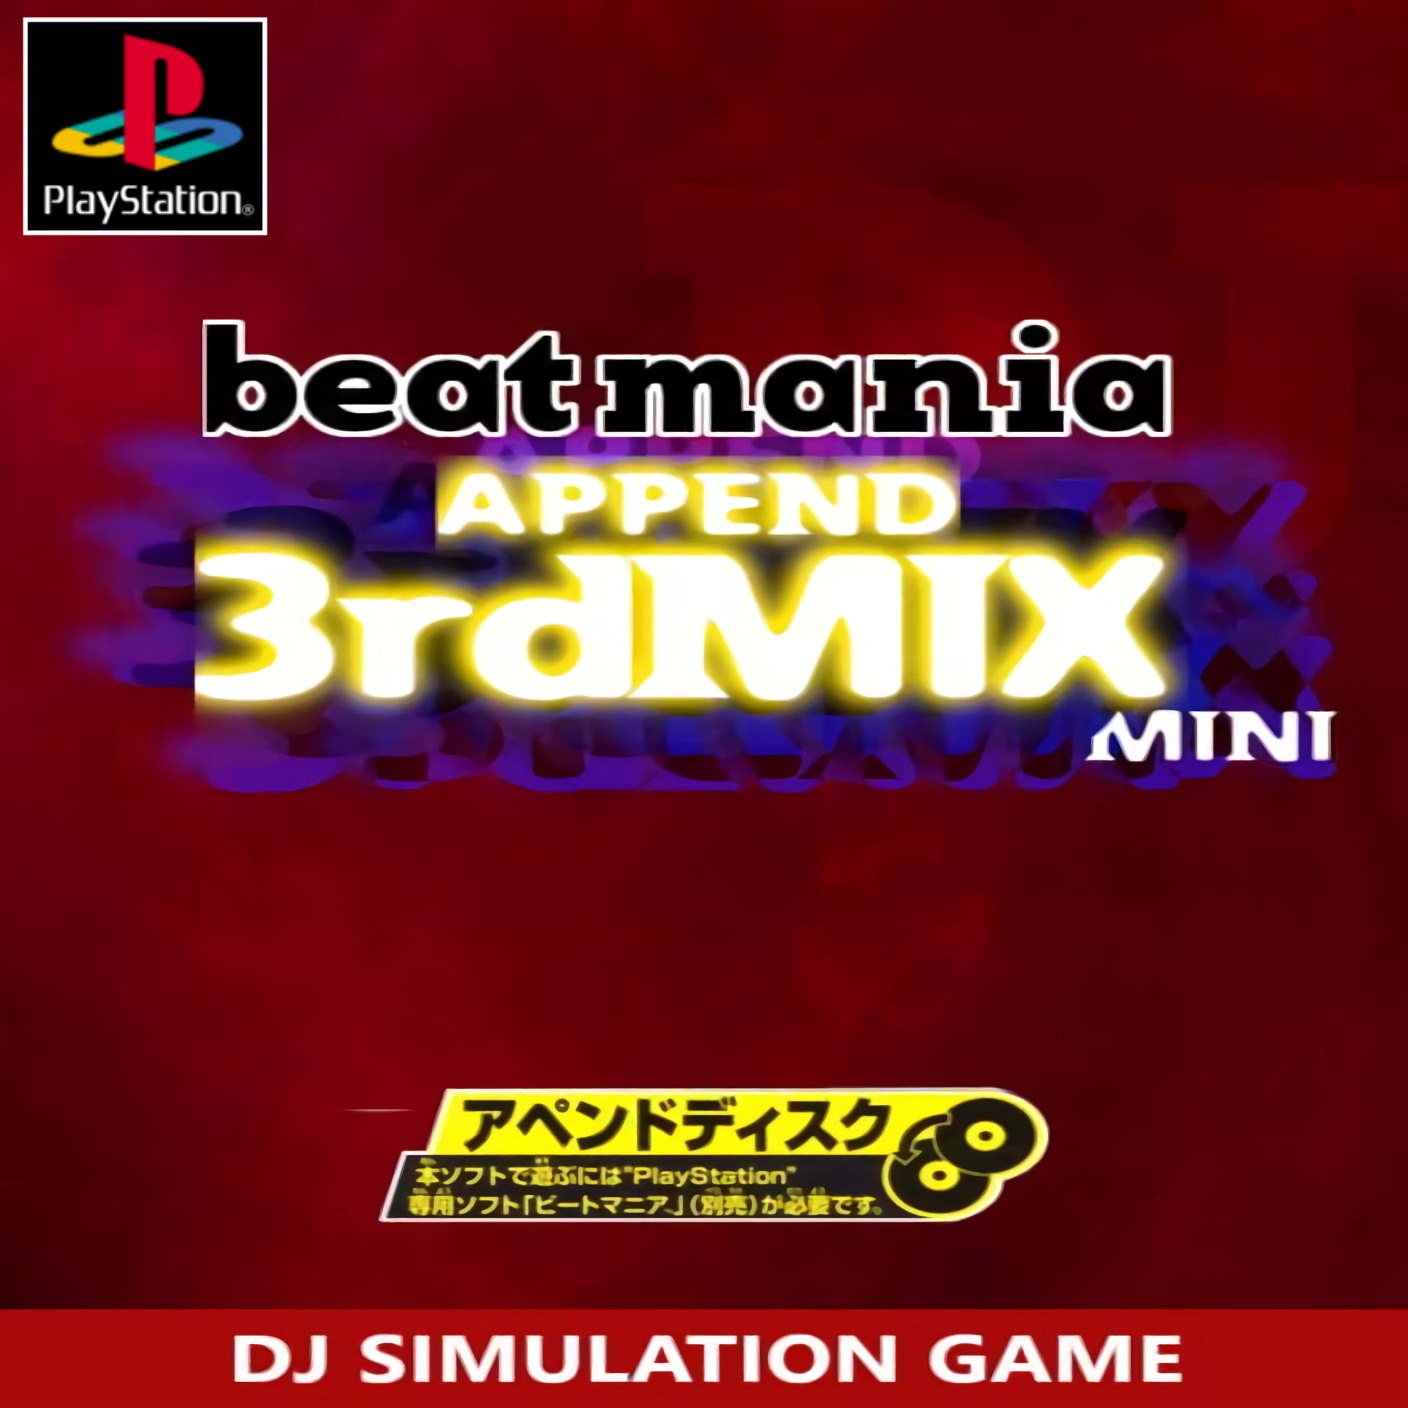 Beatmania Append 3rd Mix Mini